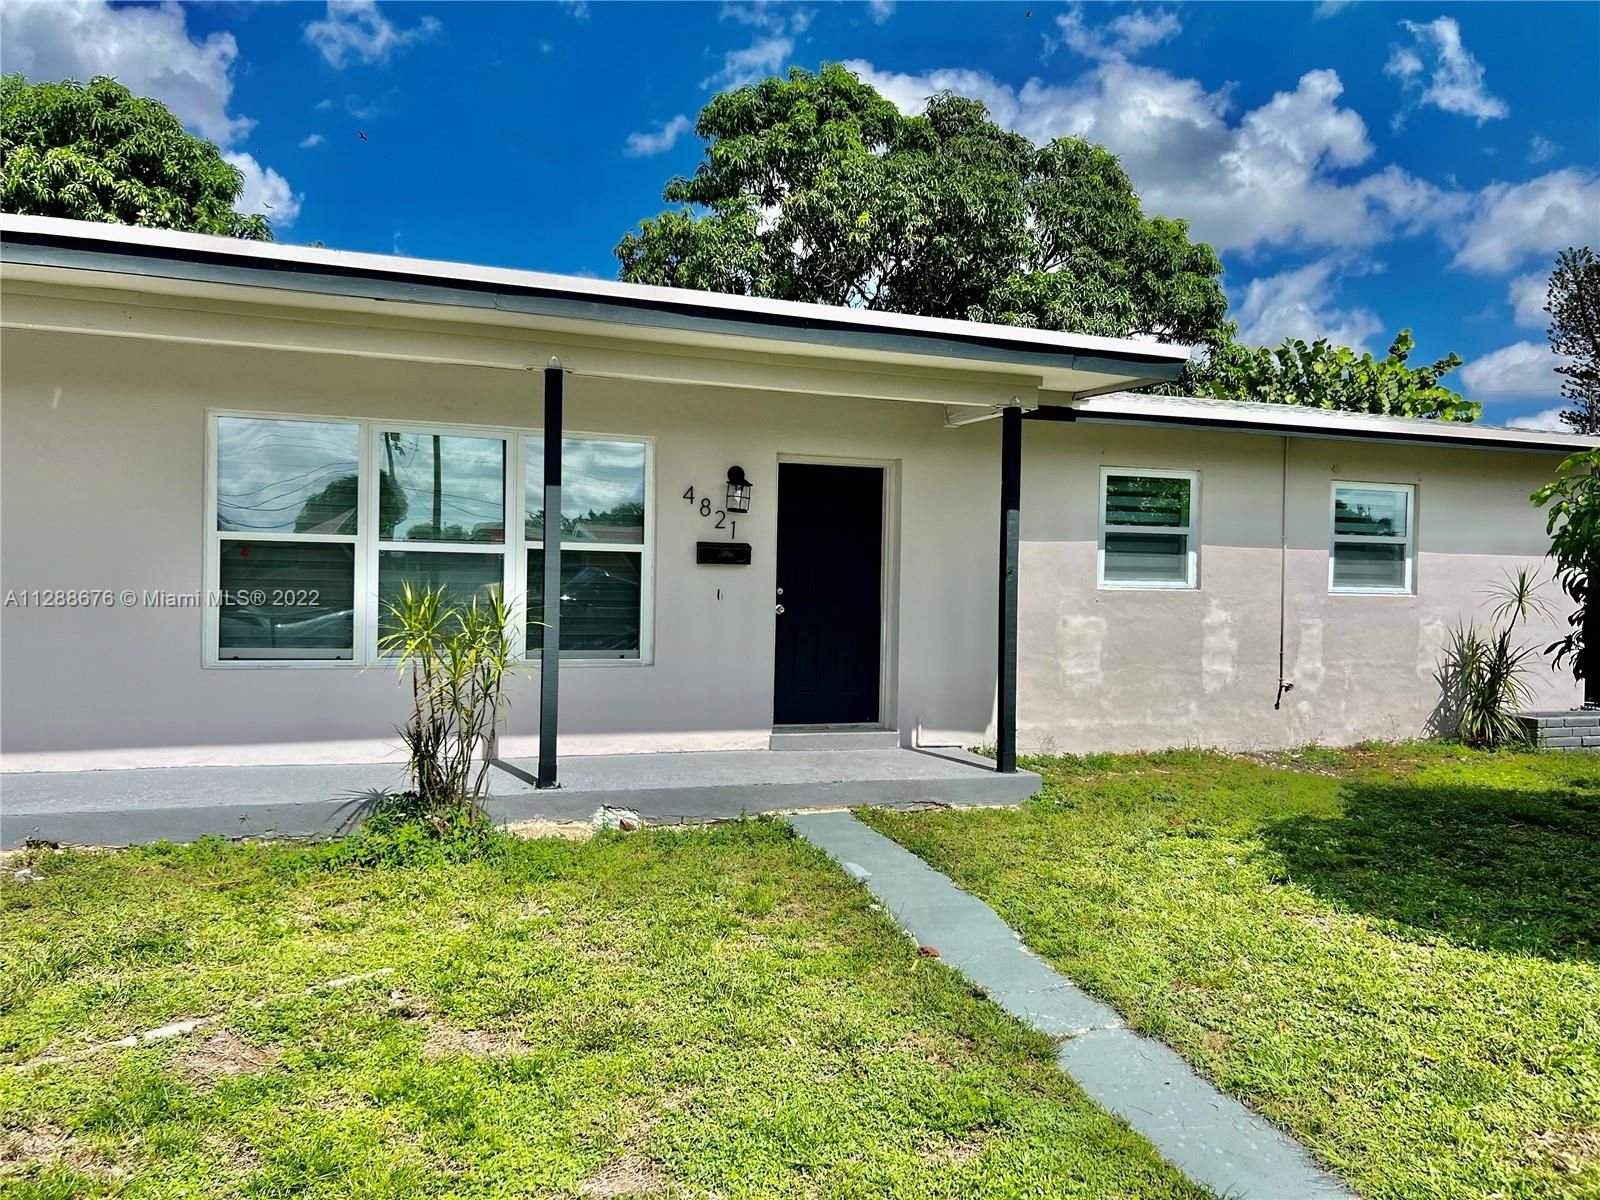 Real estate property located at 4821 176th St, Miami-Dade County, Miami Gardens, FL